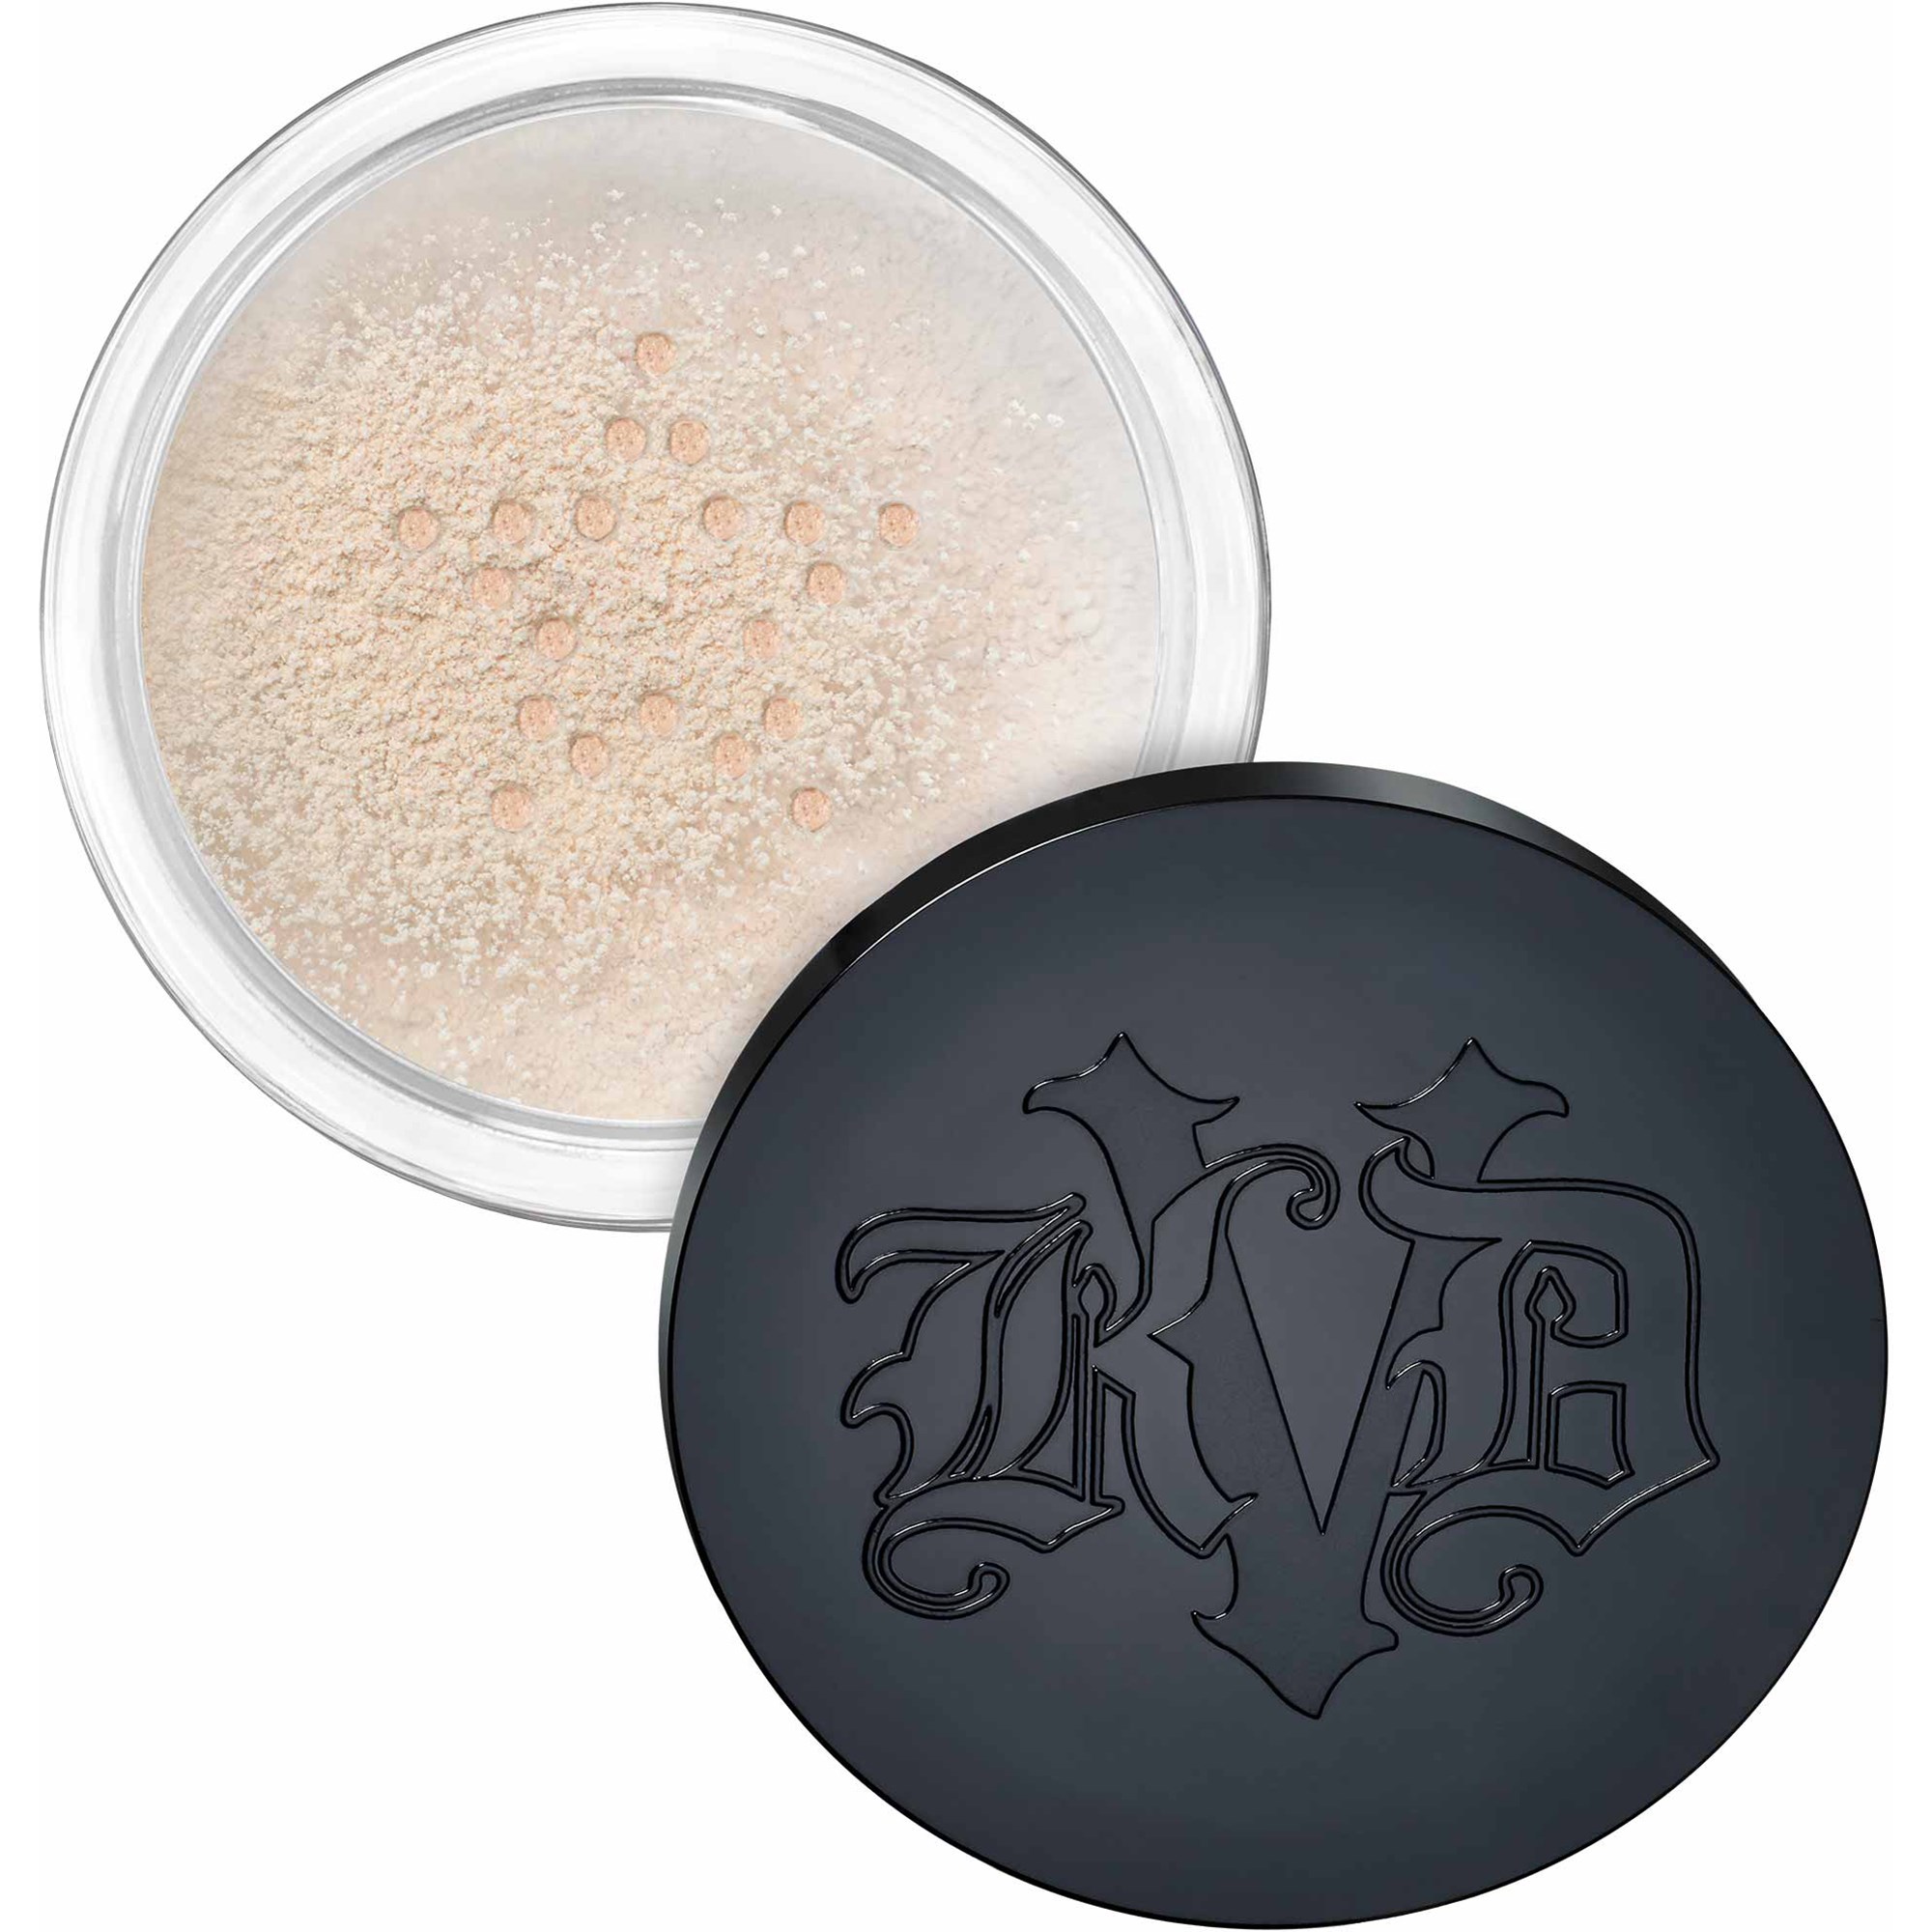 KVD Beauty Lock-it Setting Powder Translucent